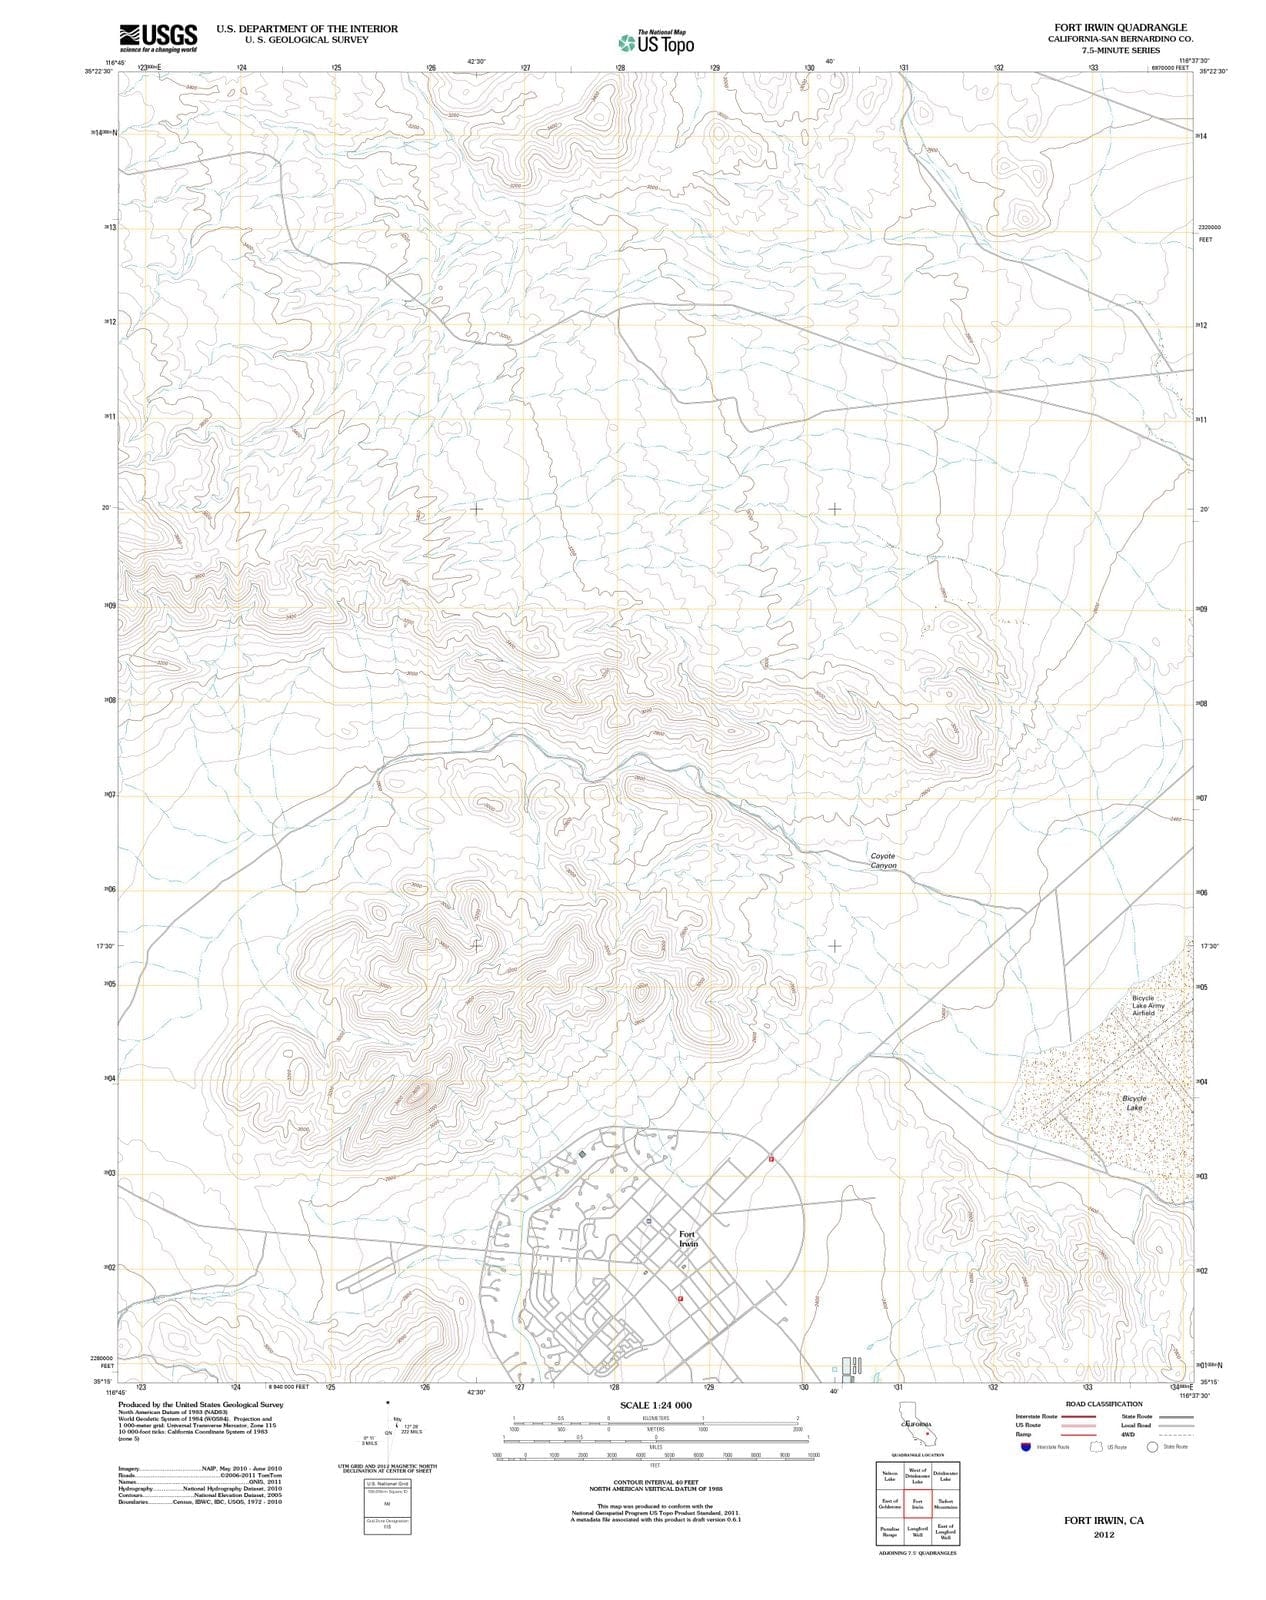 2012 Fort Irwin, CA - California - USGS Topographic Map